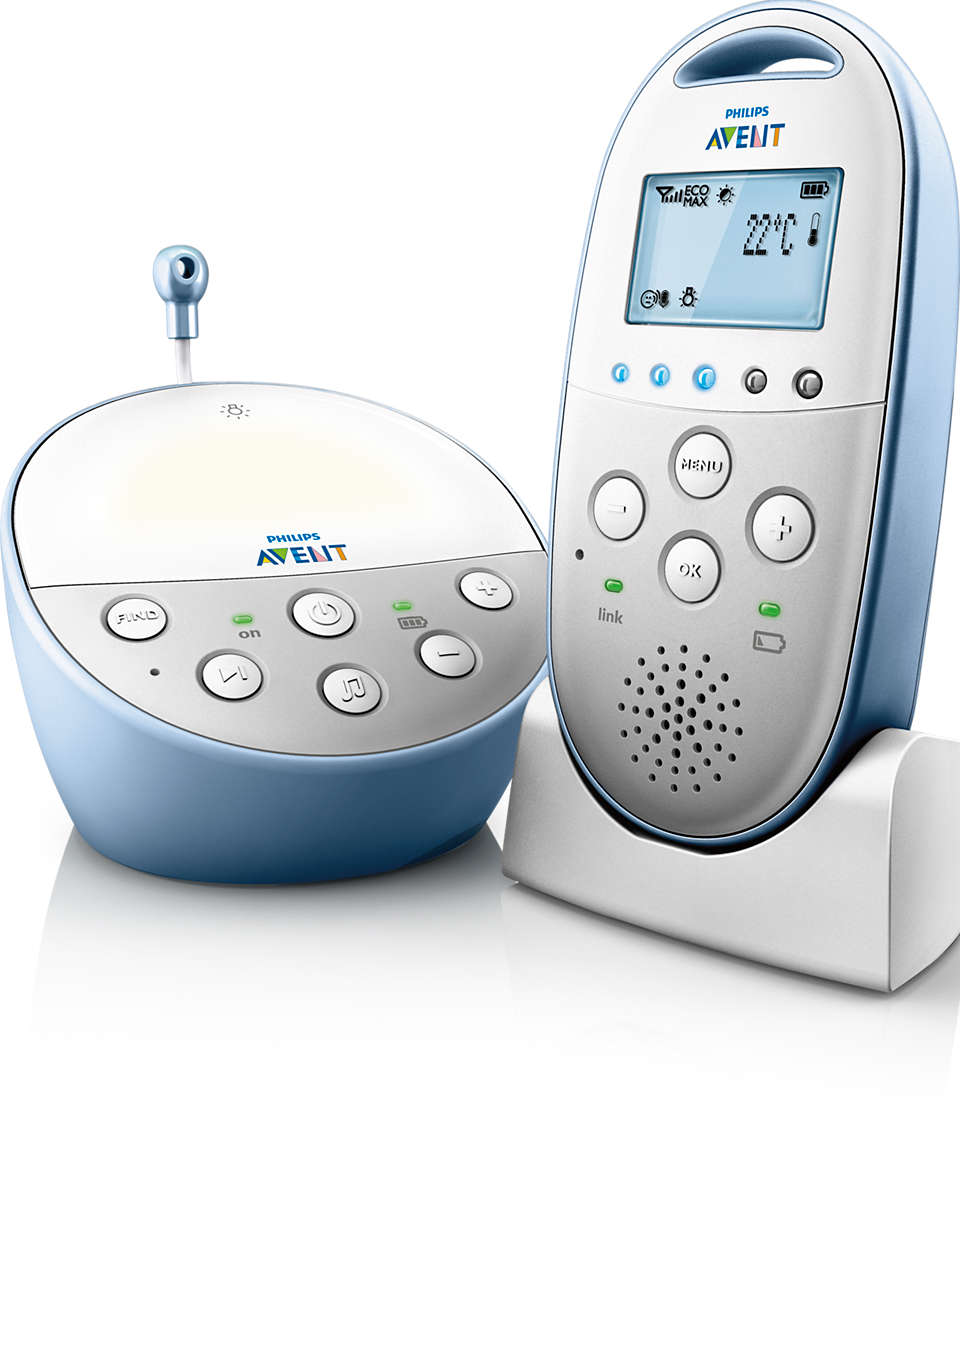 Philips Avent scd713/26 DECT audio teléfono para bebés monitor de bebés bebé seguridad muy bien 